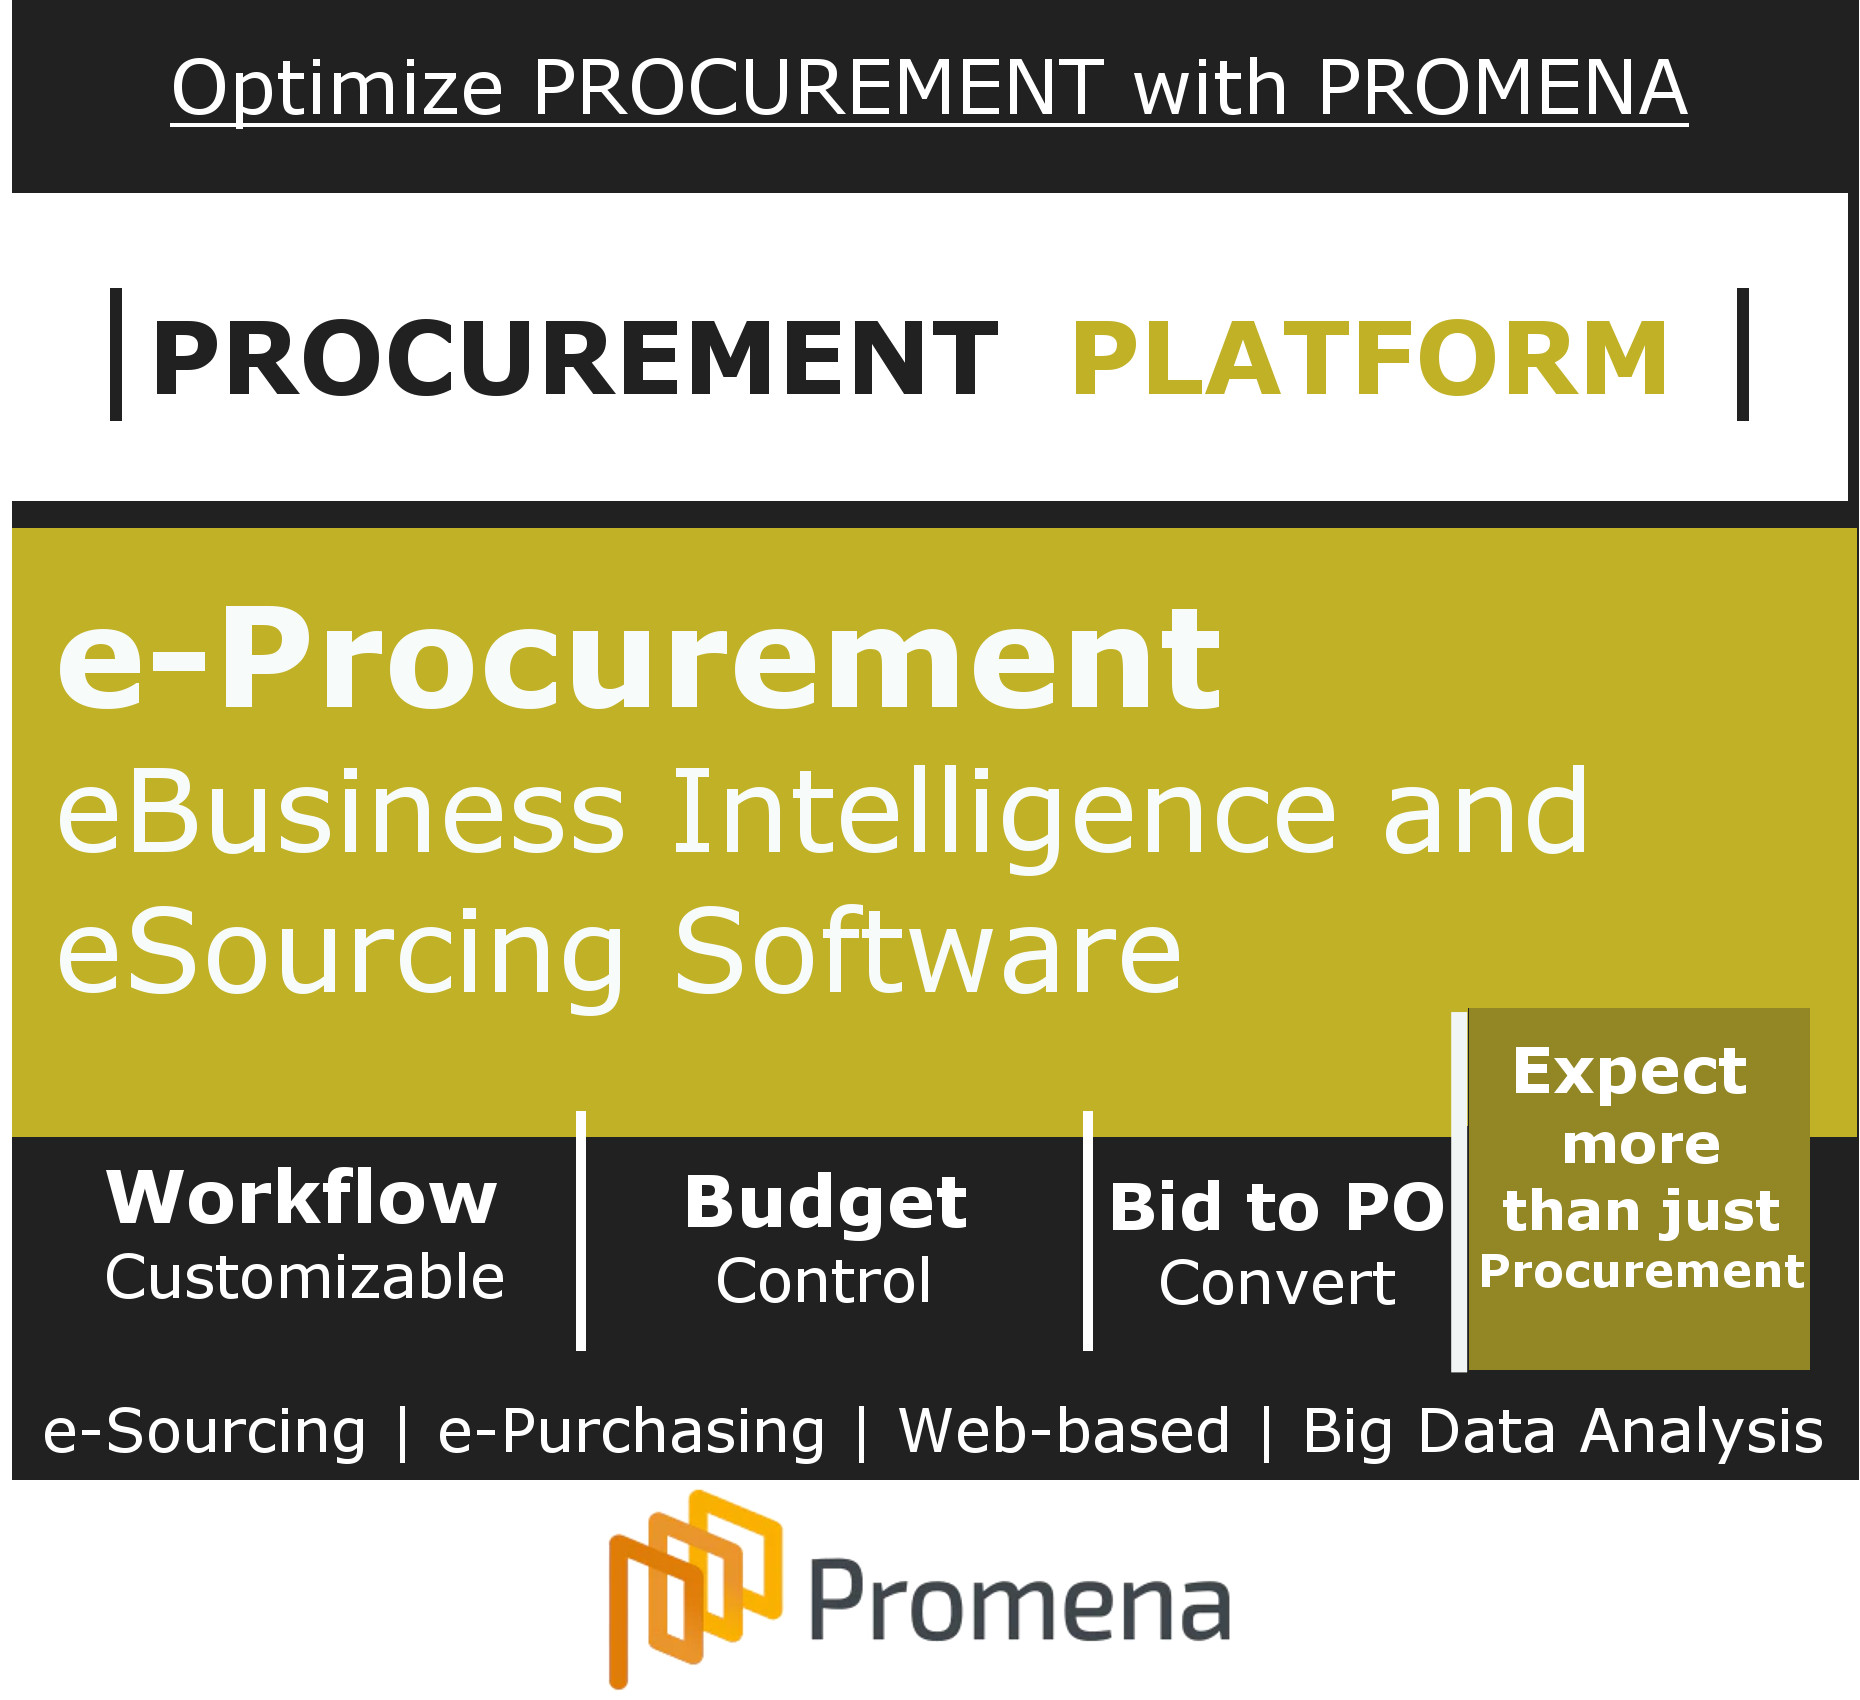 Promena e-Purchasing Platform and Procurement Services picture